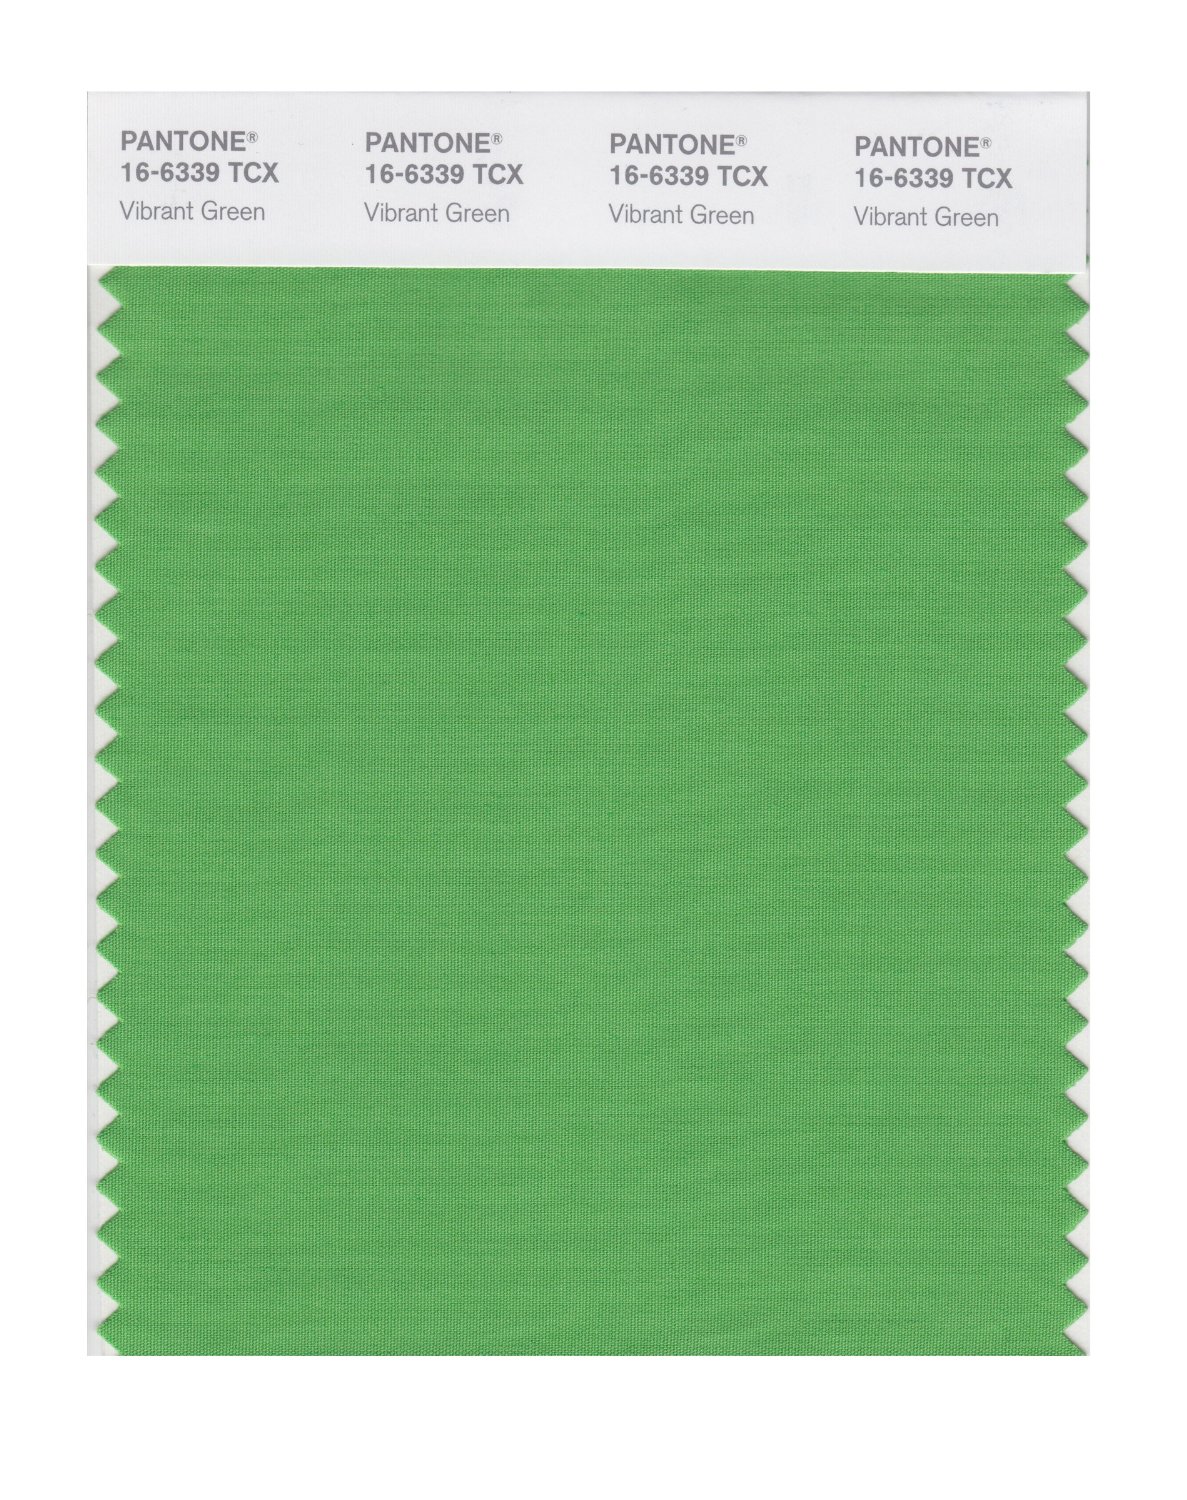 Pantone Cotton Swatch 16-6339 Vibrant Green